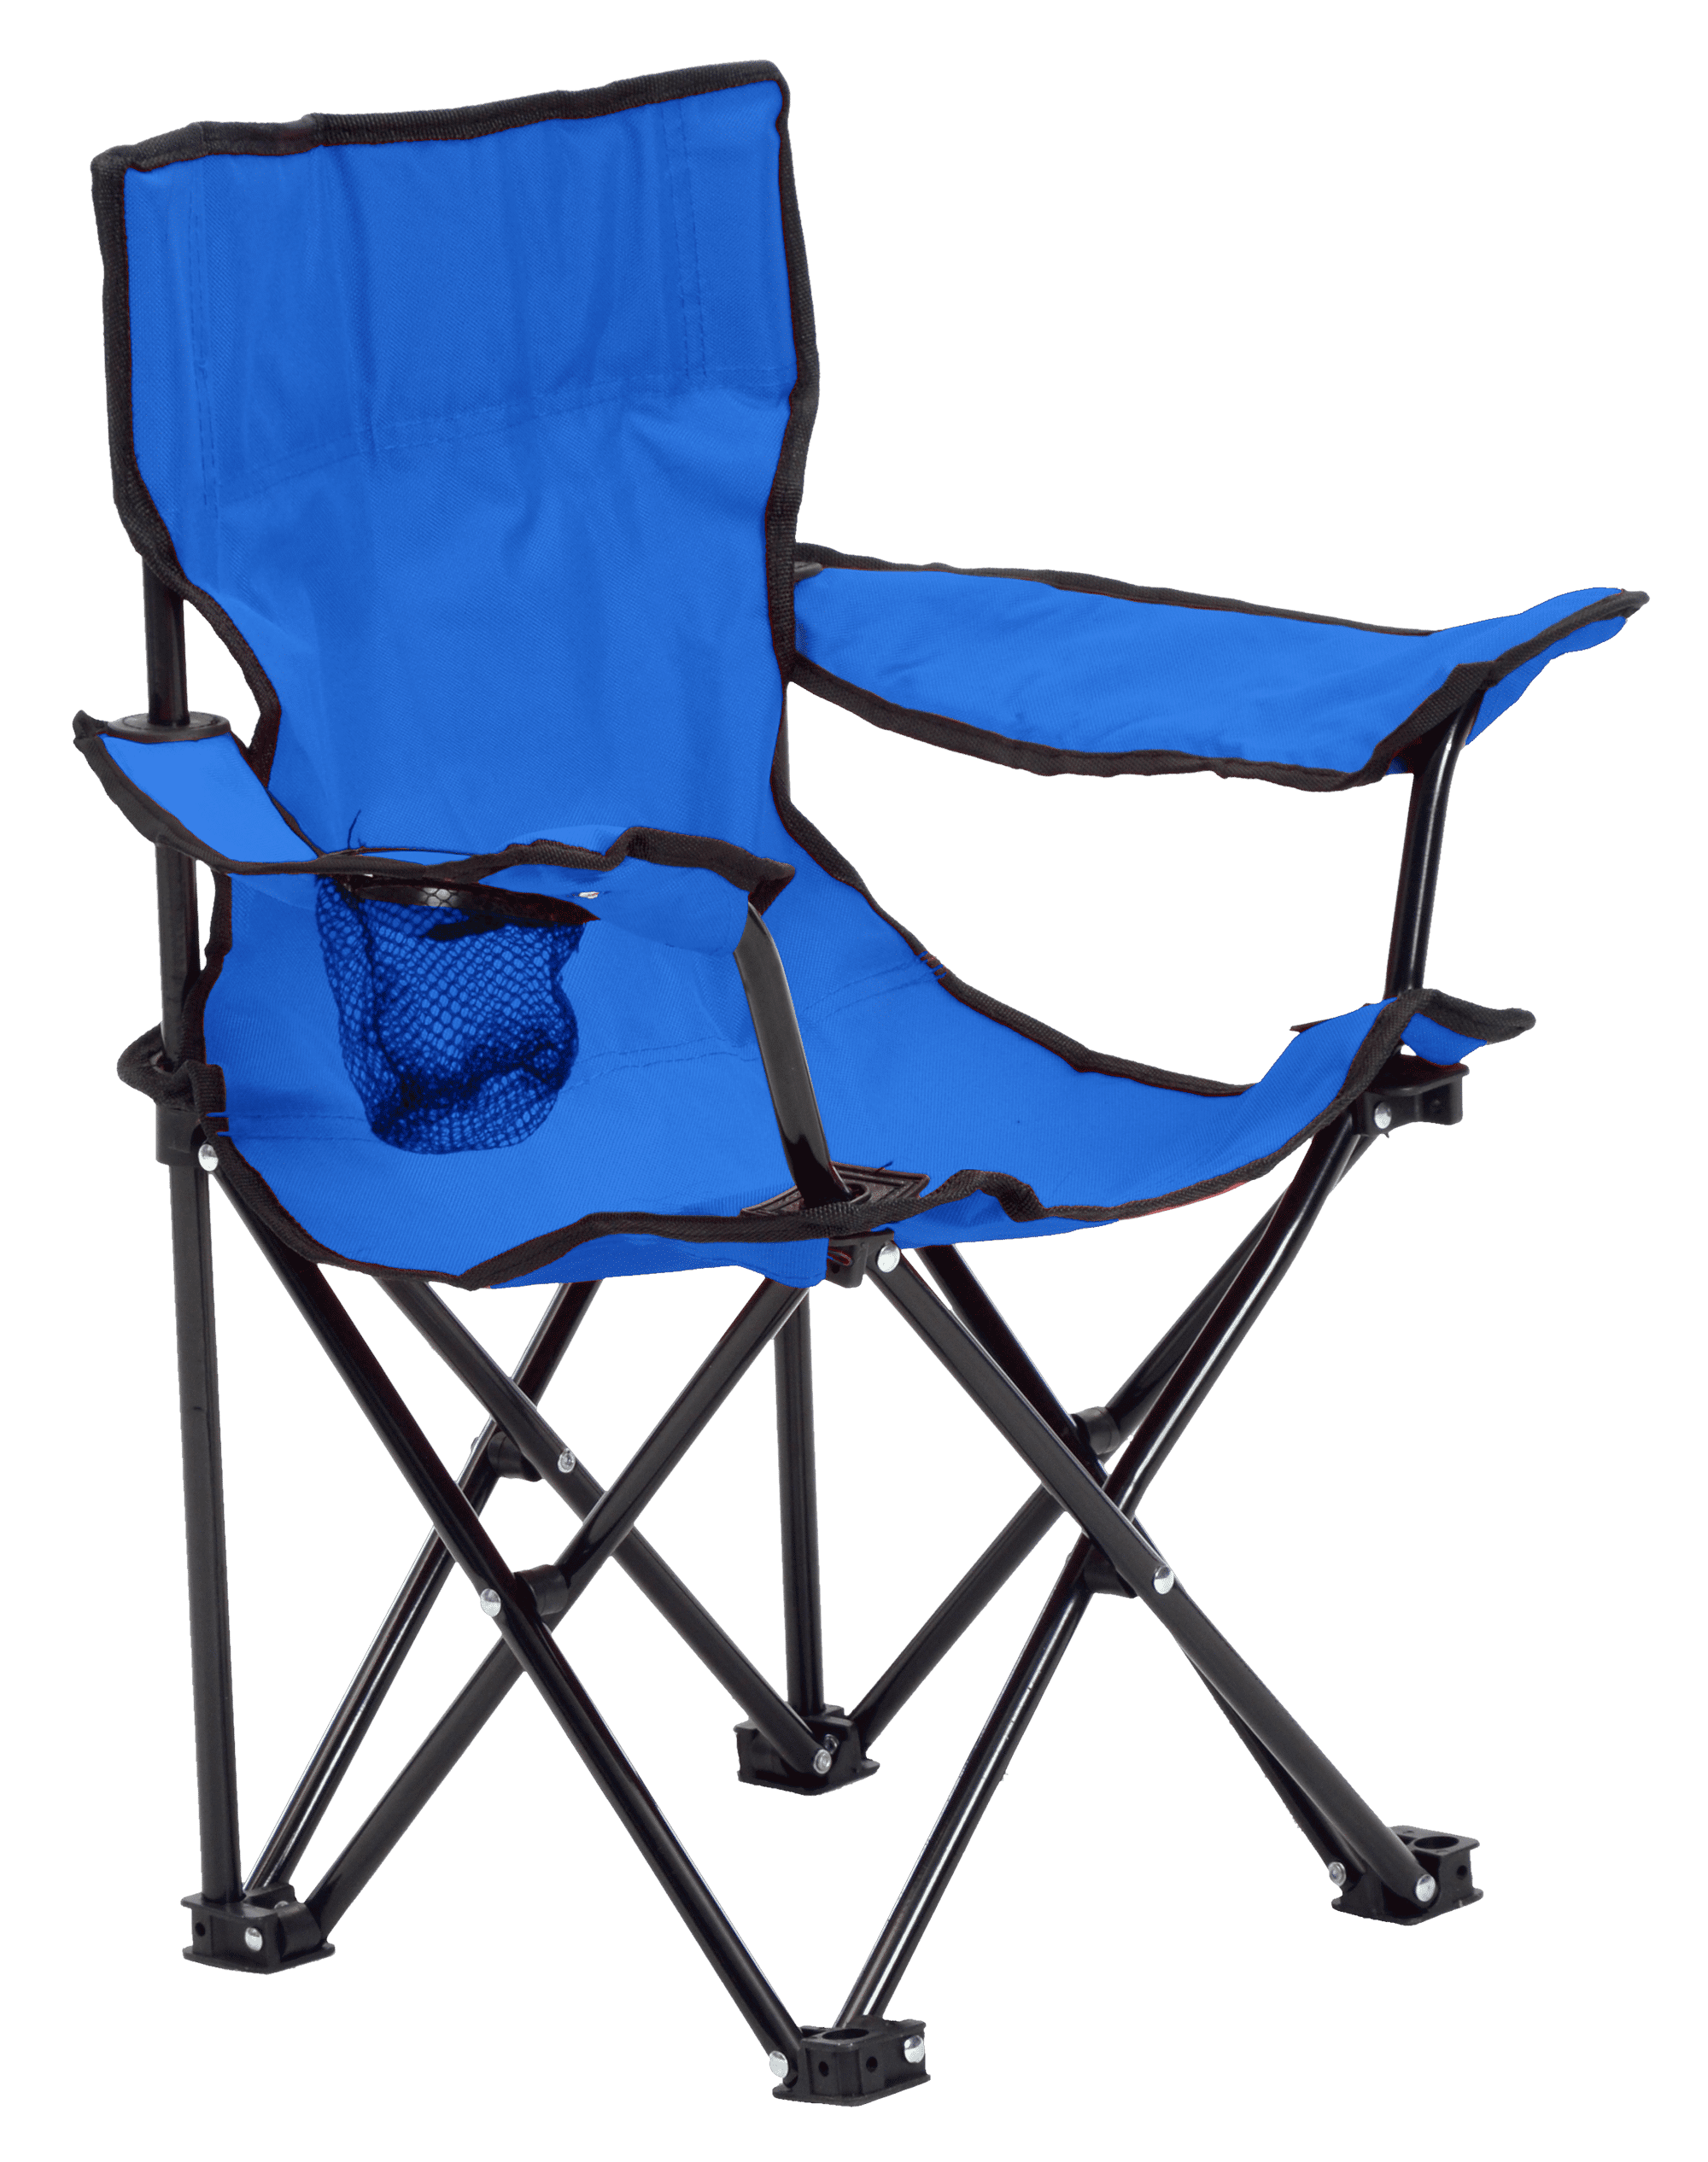 Kid's Folding Chair - Blue - Walmart.com - Walmart.com